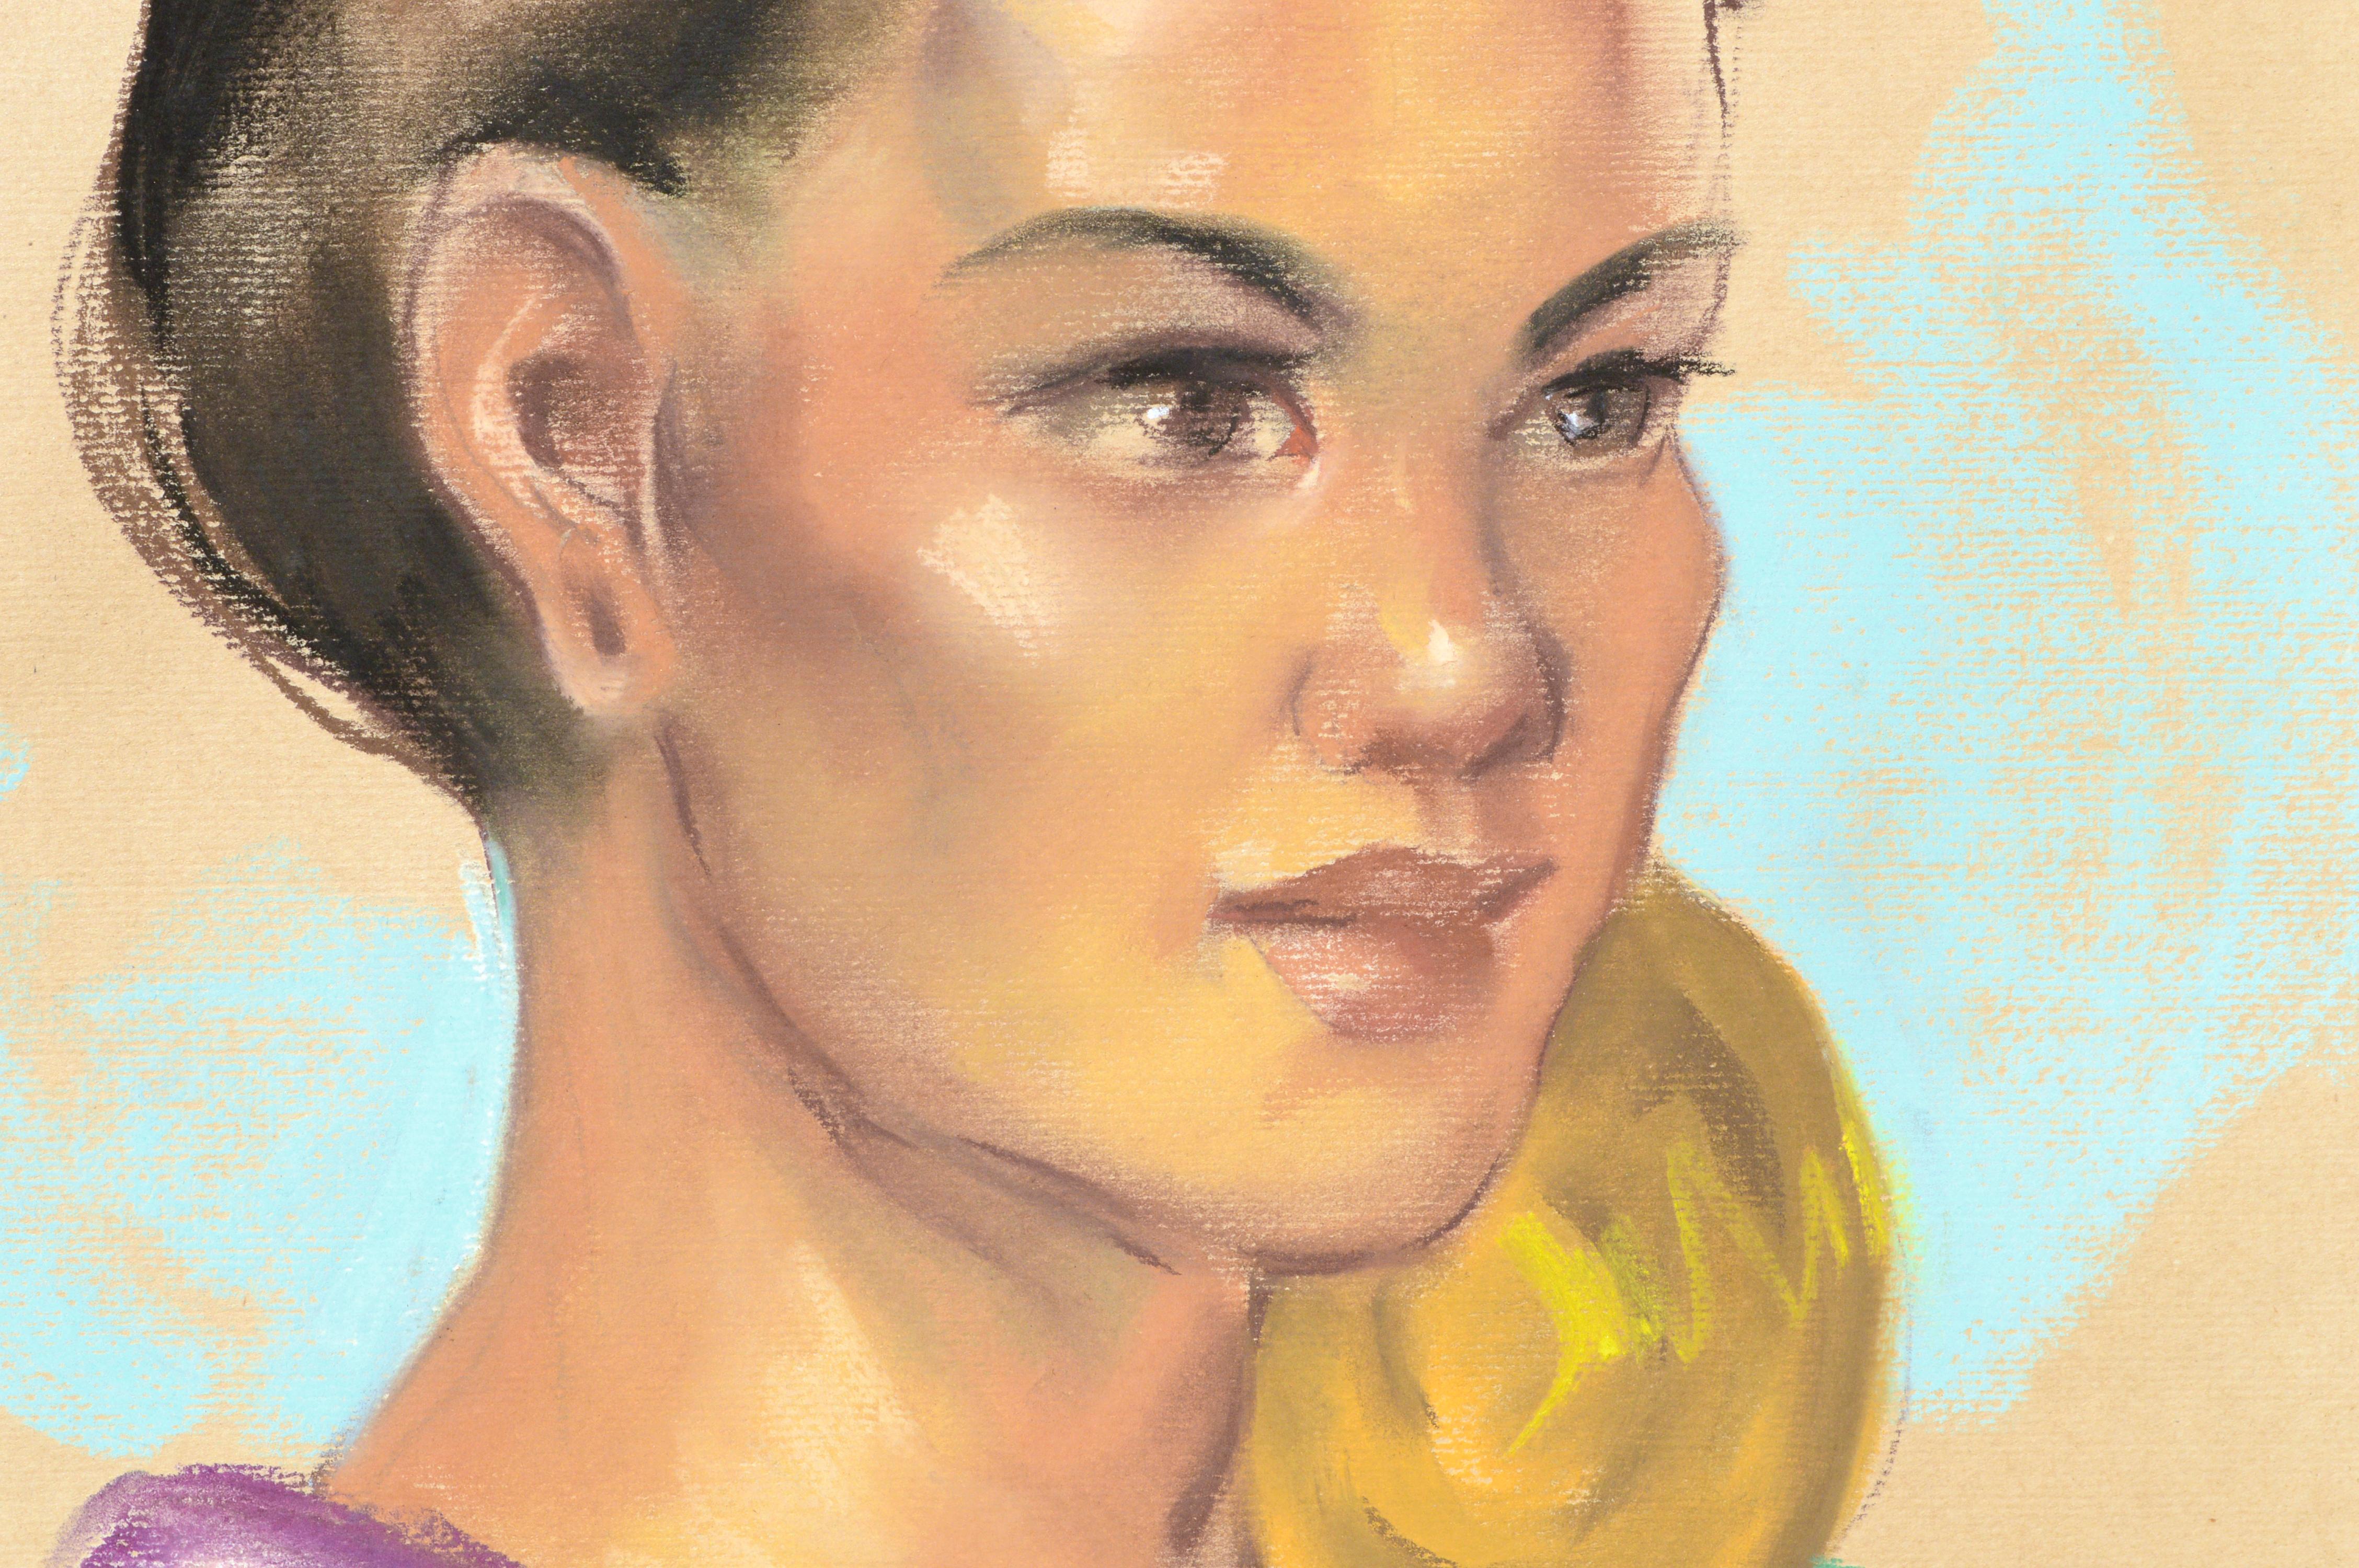 Portrait of a Woman with Gold Ear Ornament by Antonio Gonzales Dumlao - Realist Art by Antonio Dumlao